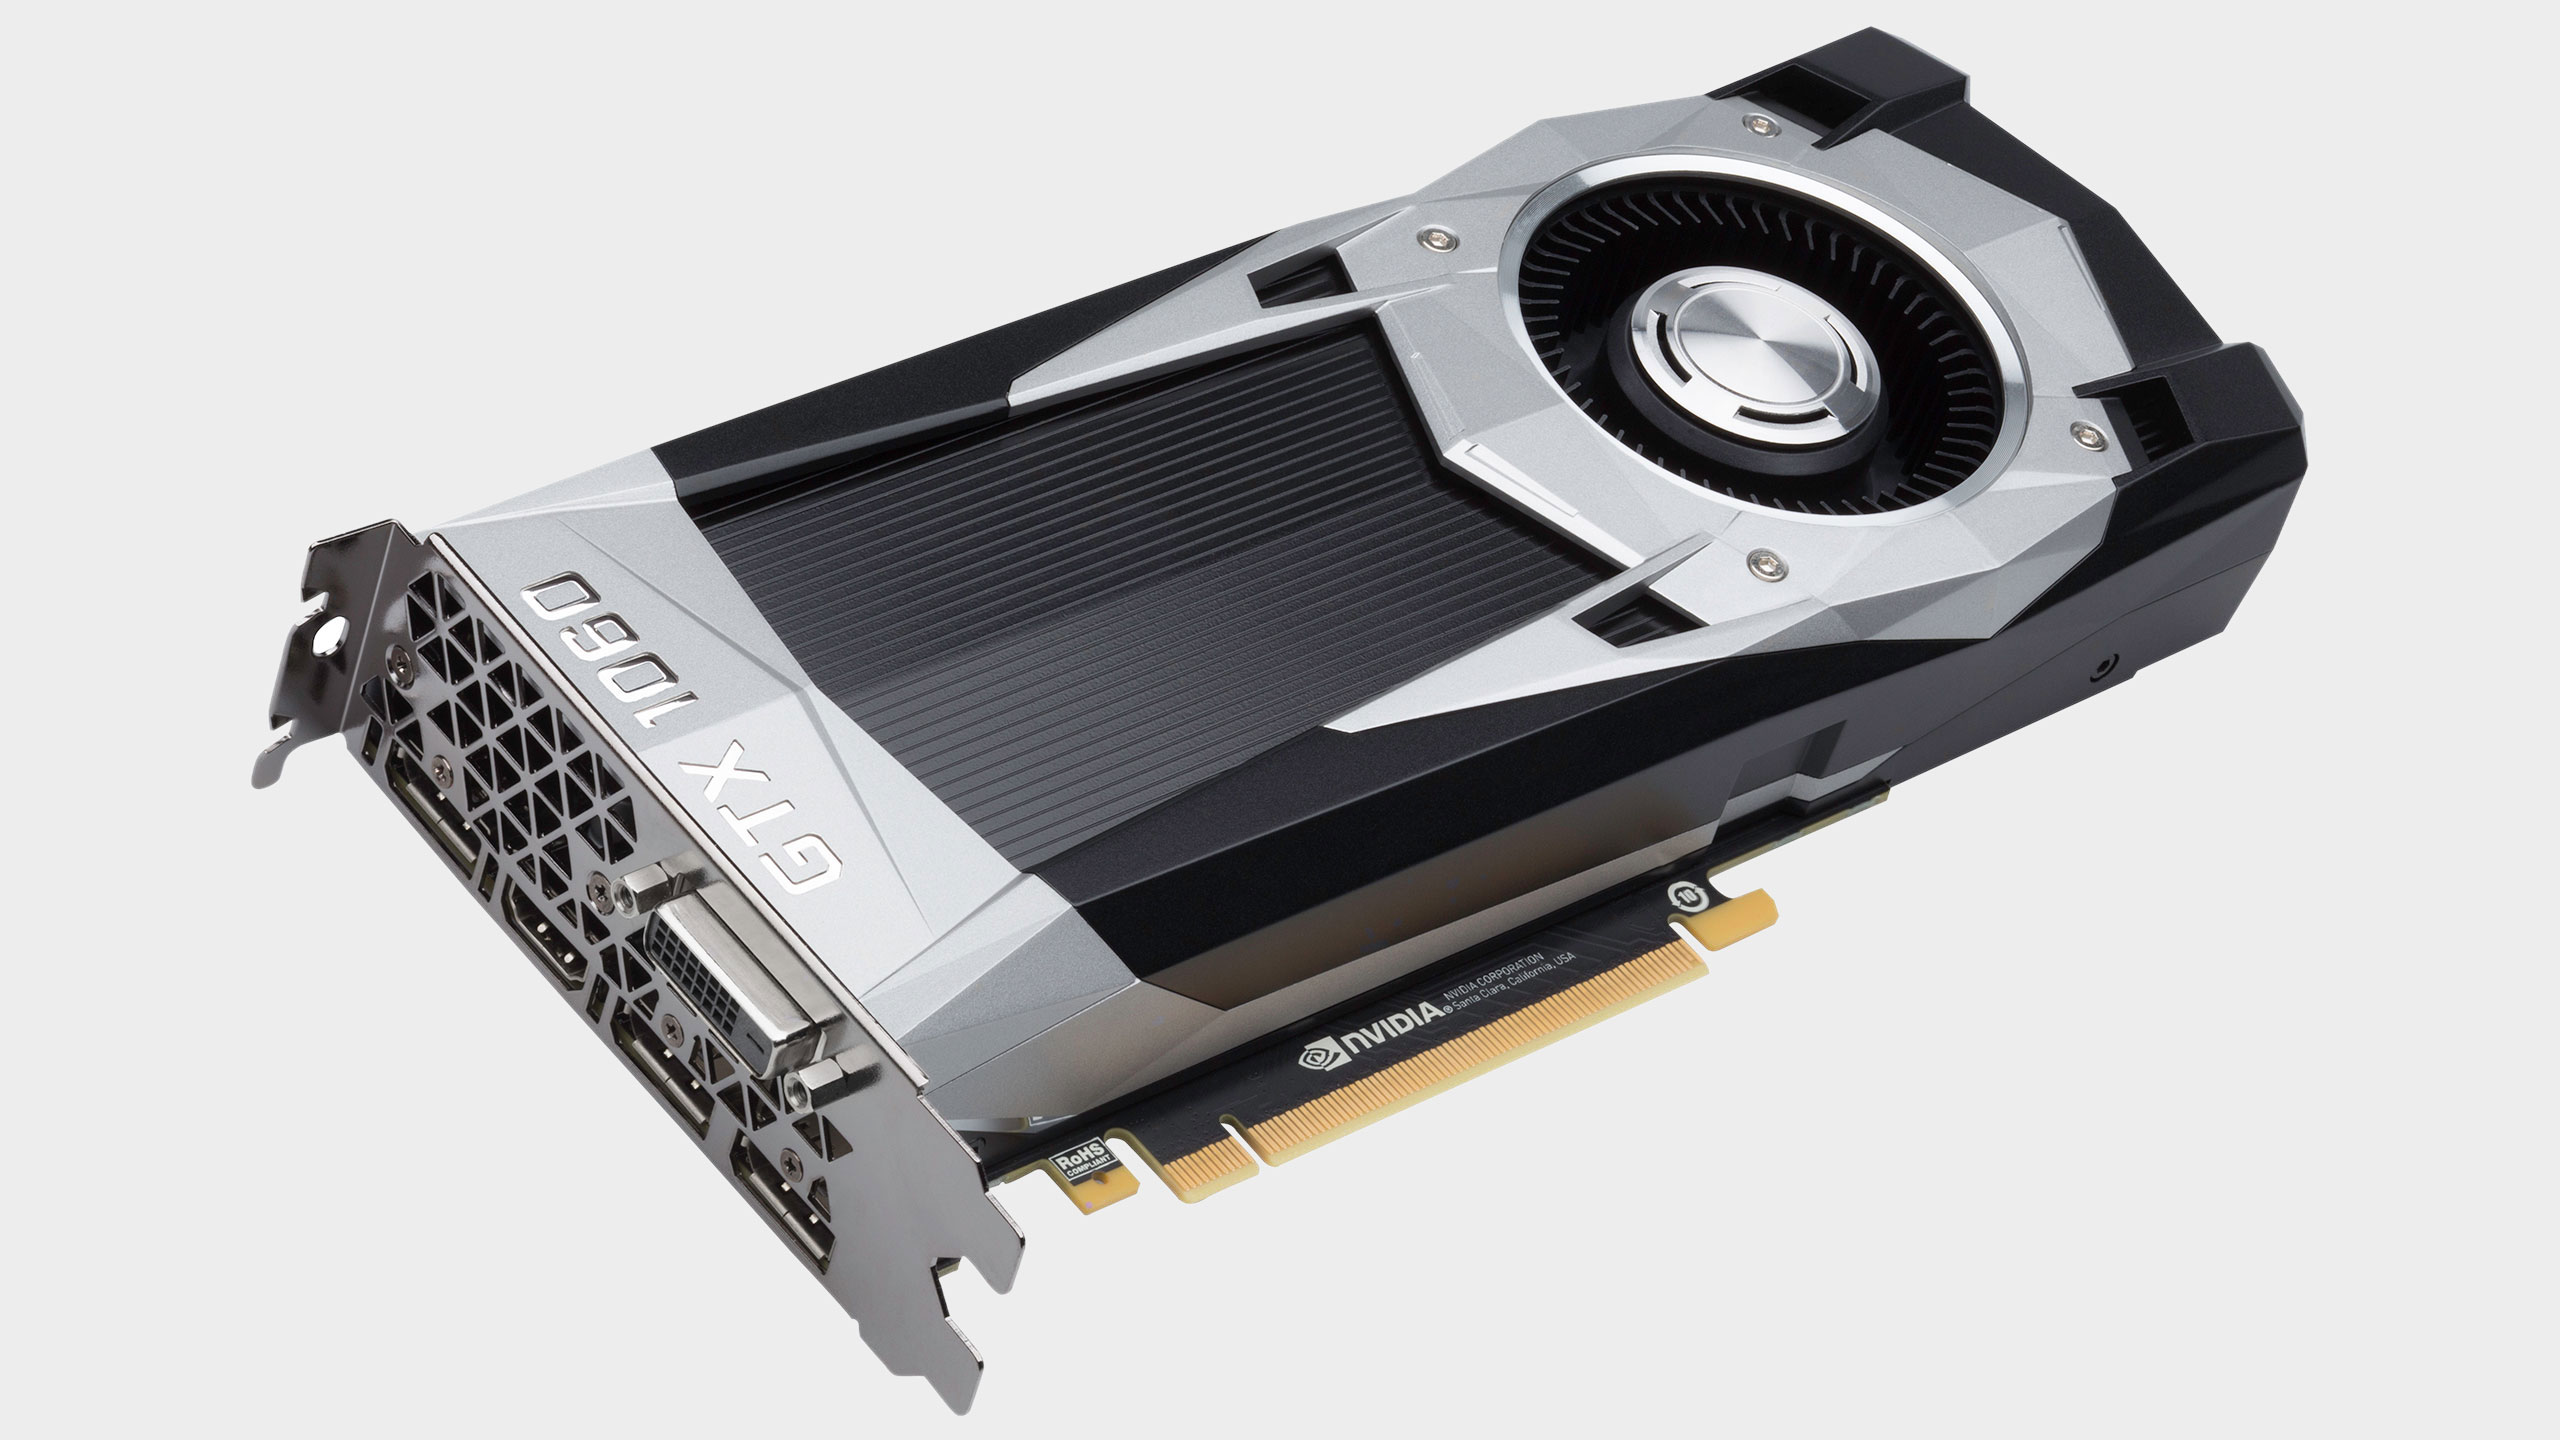 The GeForce GTX 1060 is still the most popular GPU in Steam's